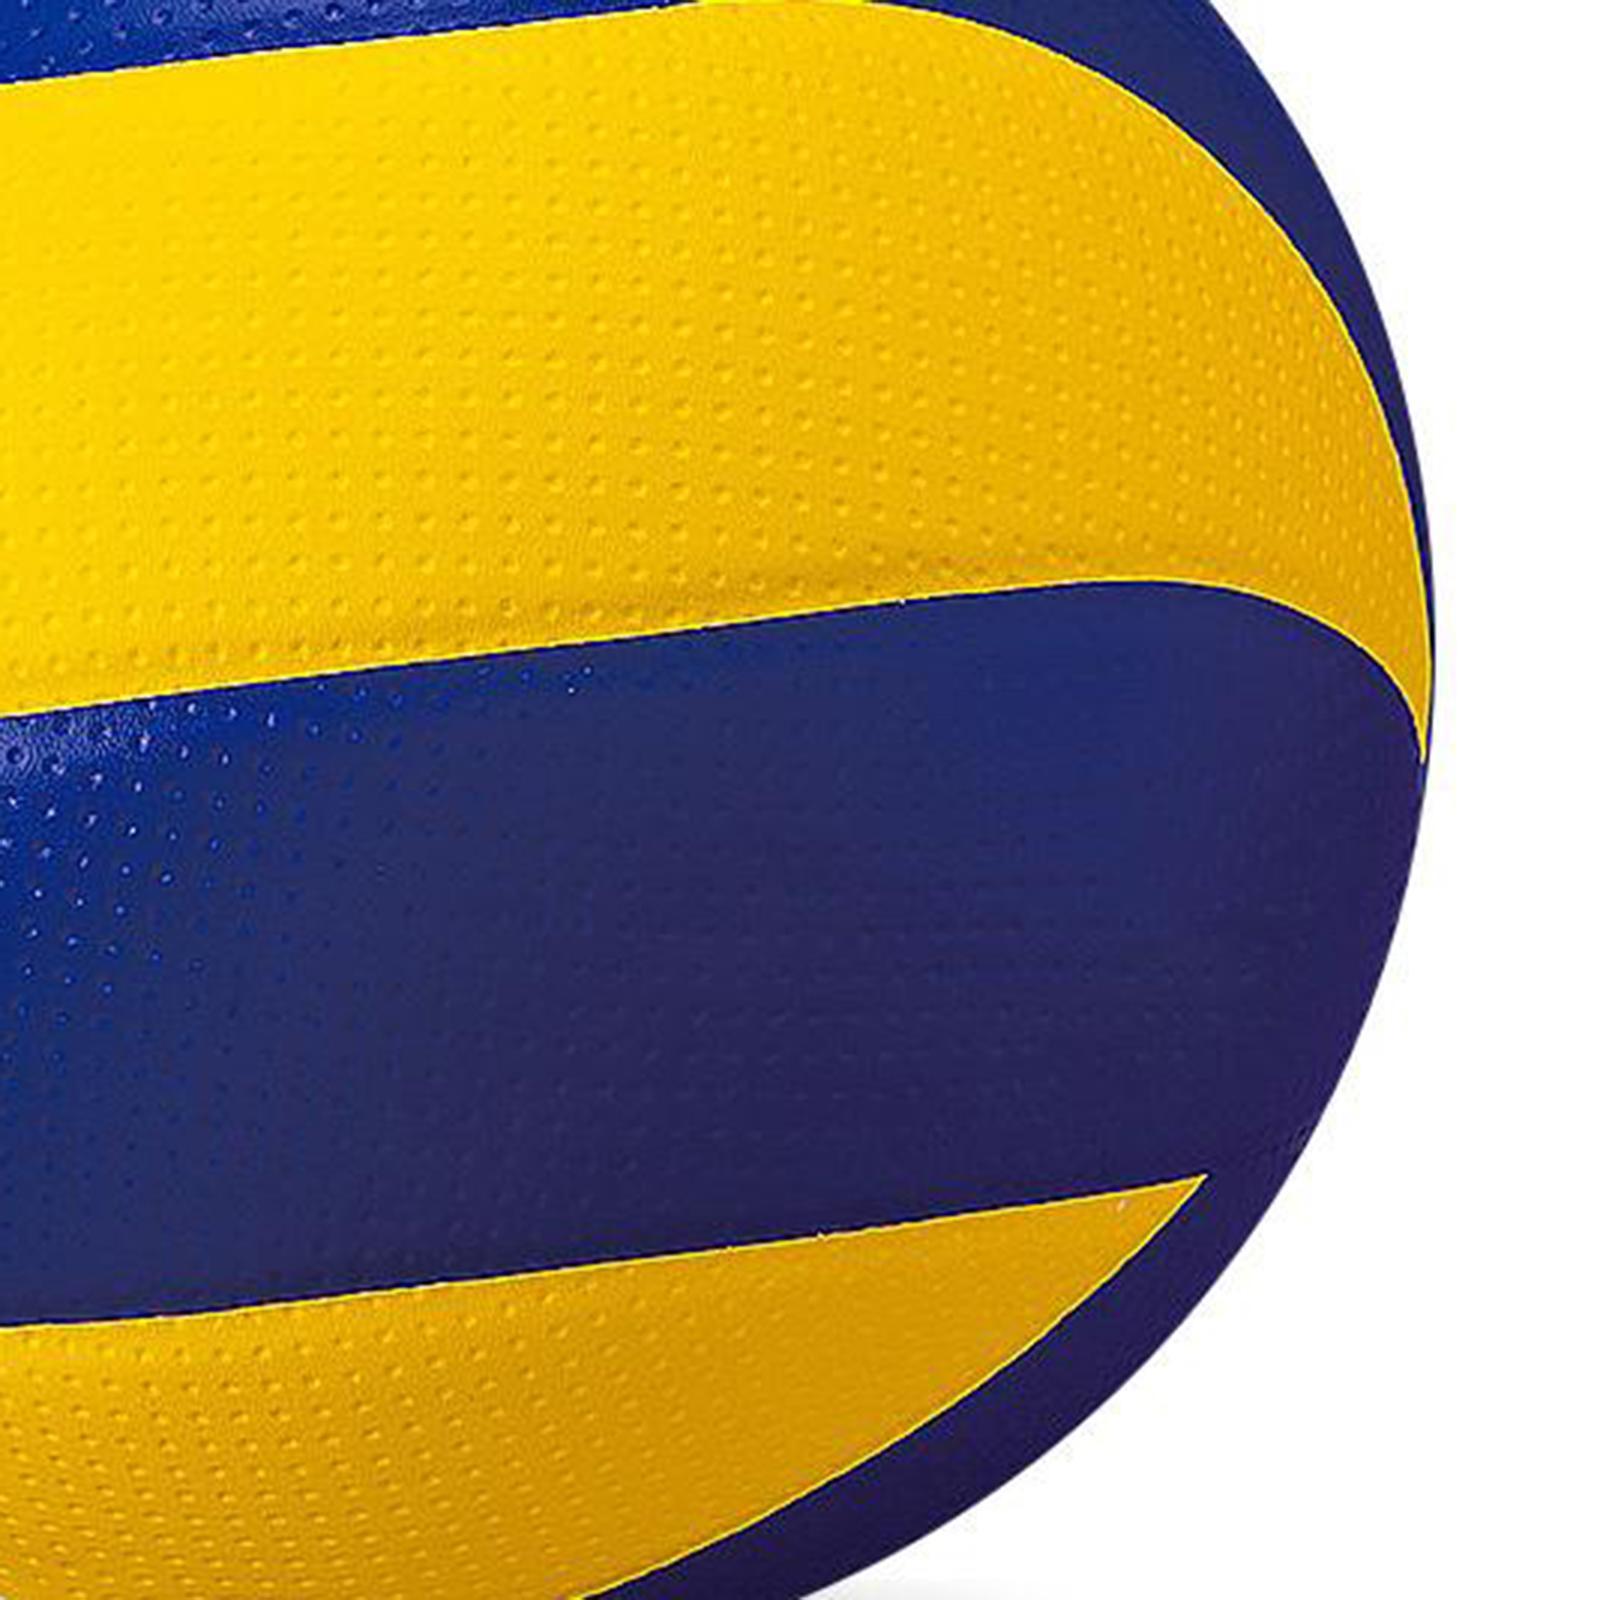 3xBeach Volleyball Soft Touch Volley Ball Size 5 Beach Ball Pool Ball